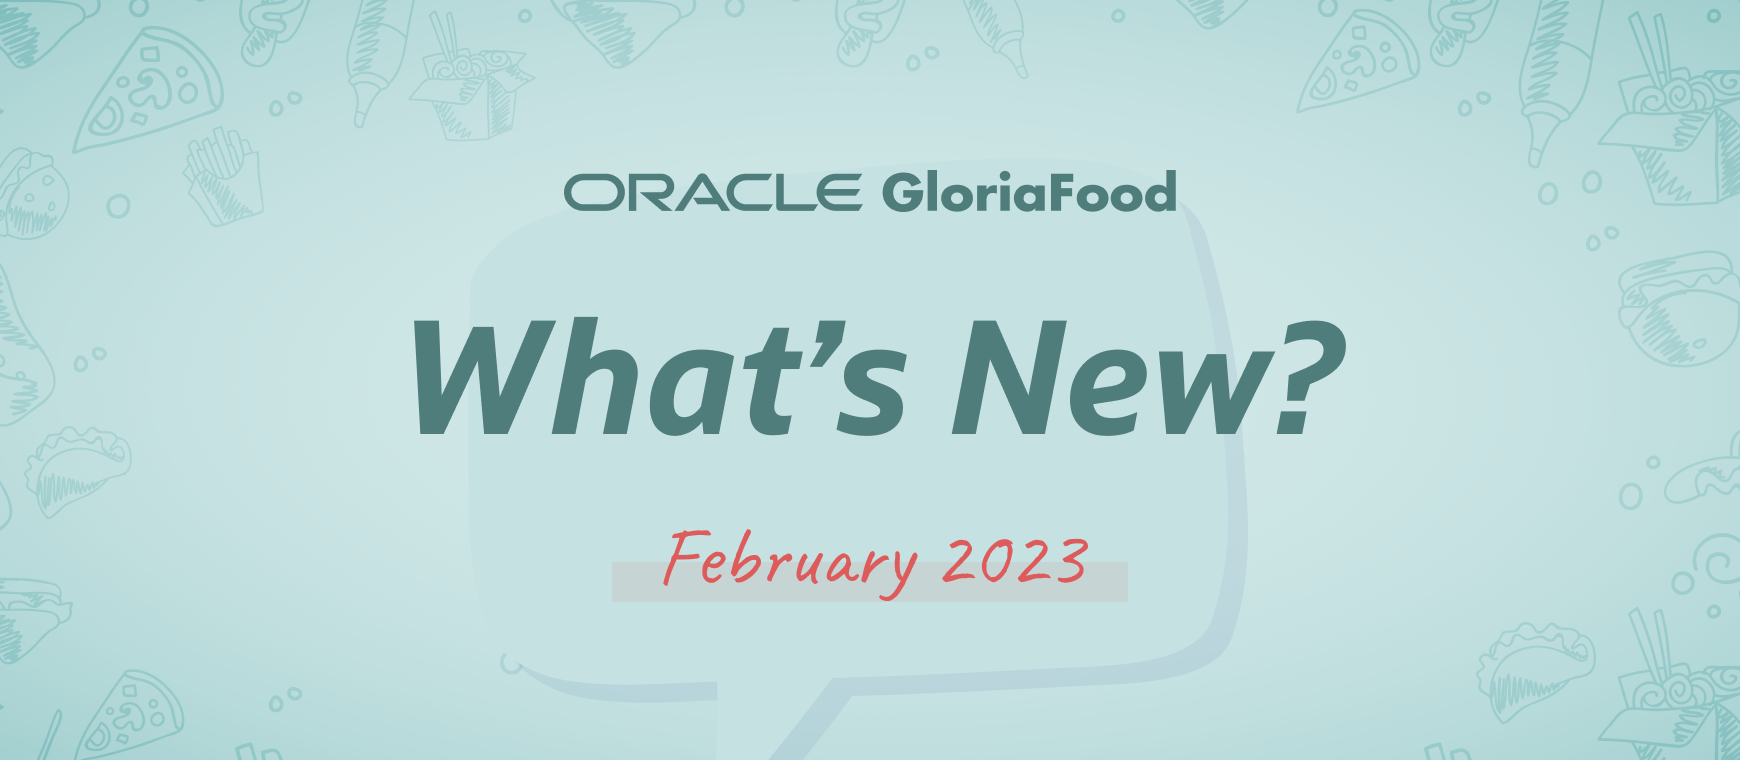 gloriafood updates february 2023